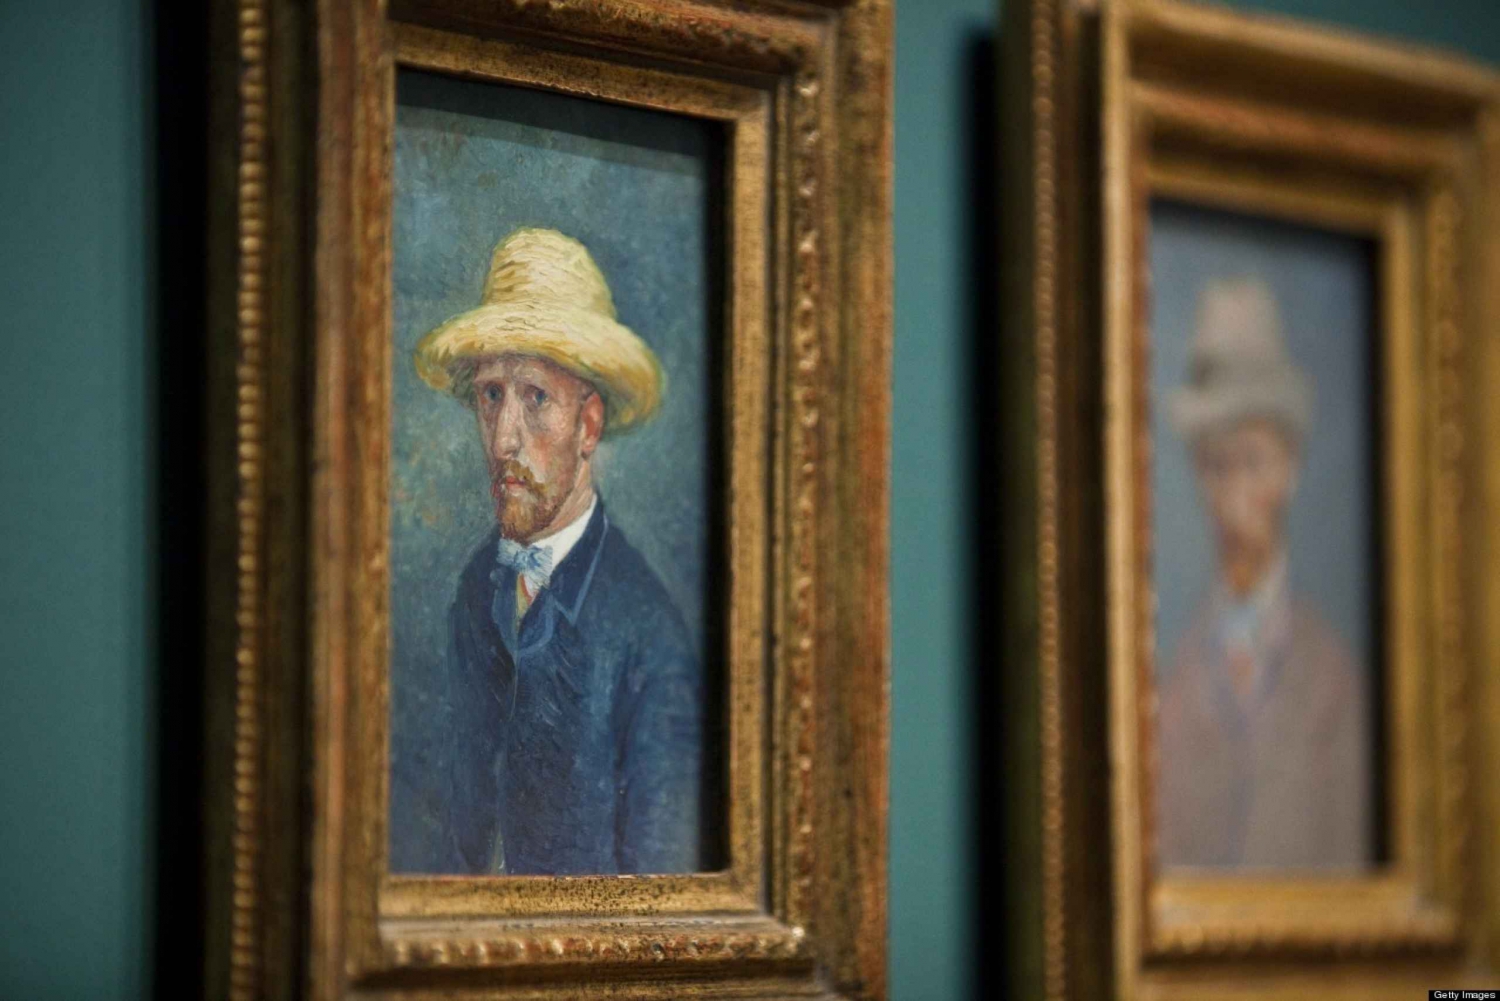 Amsterdam: Van Gogh Museum & Red Light District Tour